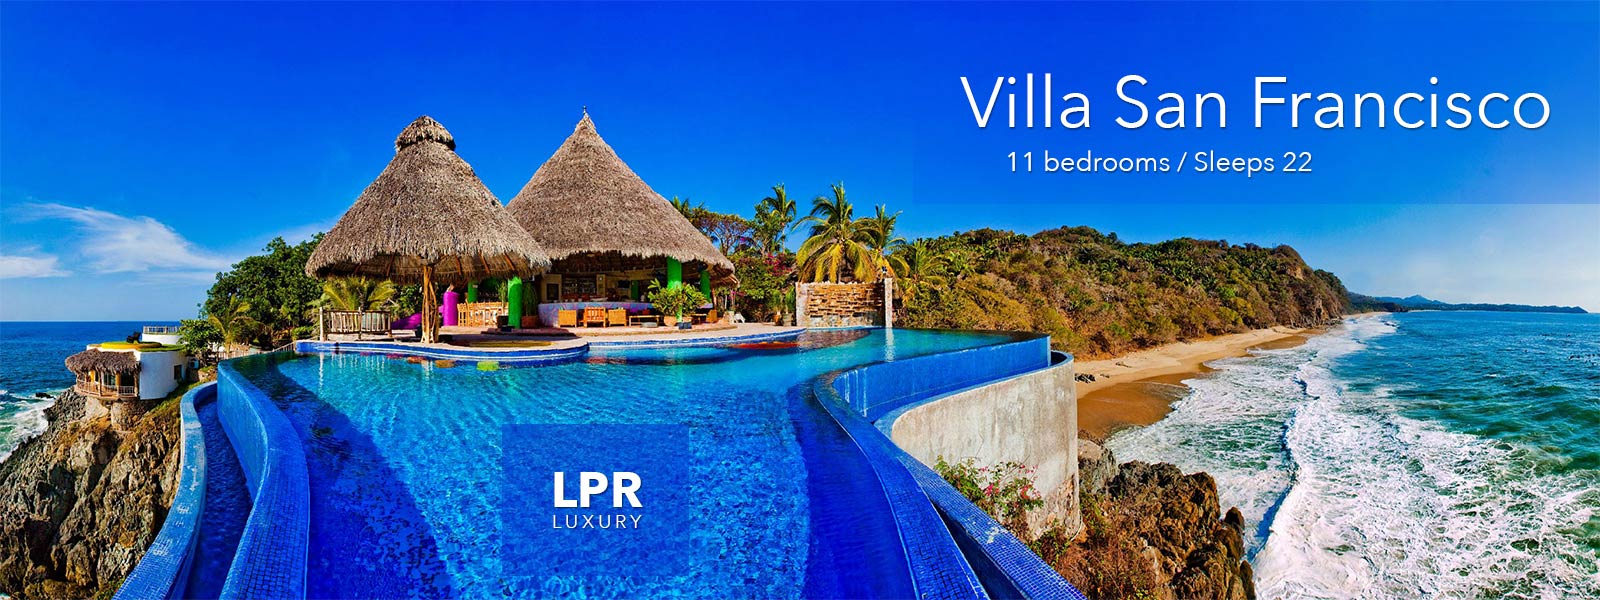 Villa San Francisco - Costa Nayarit - North of Puerto Vallarta, Mexico - Luxury real estate for sale